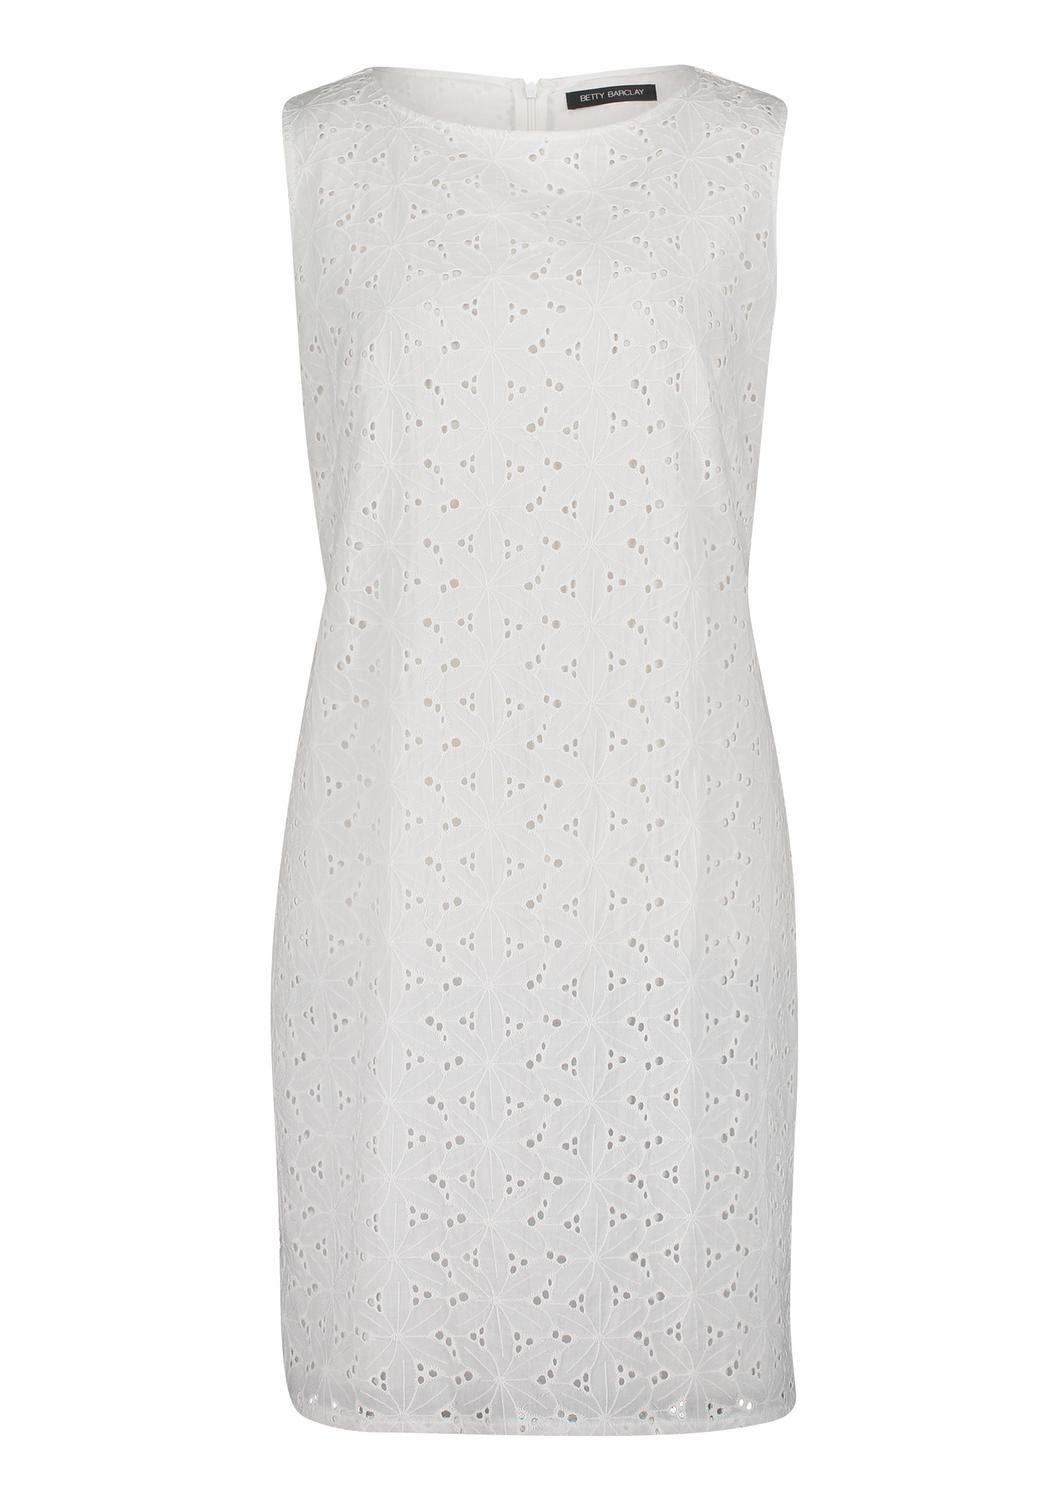 Betty Barclay Sommerkleid Kleid Kurz ohne Arm, Bright White